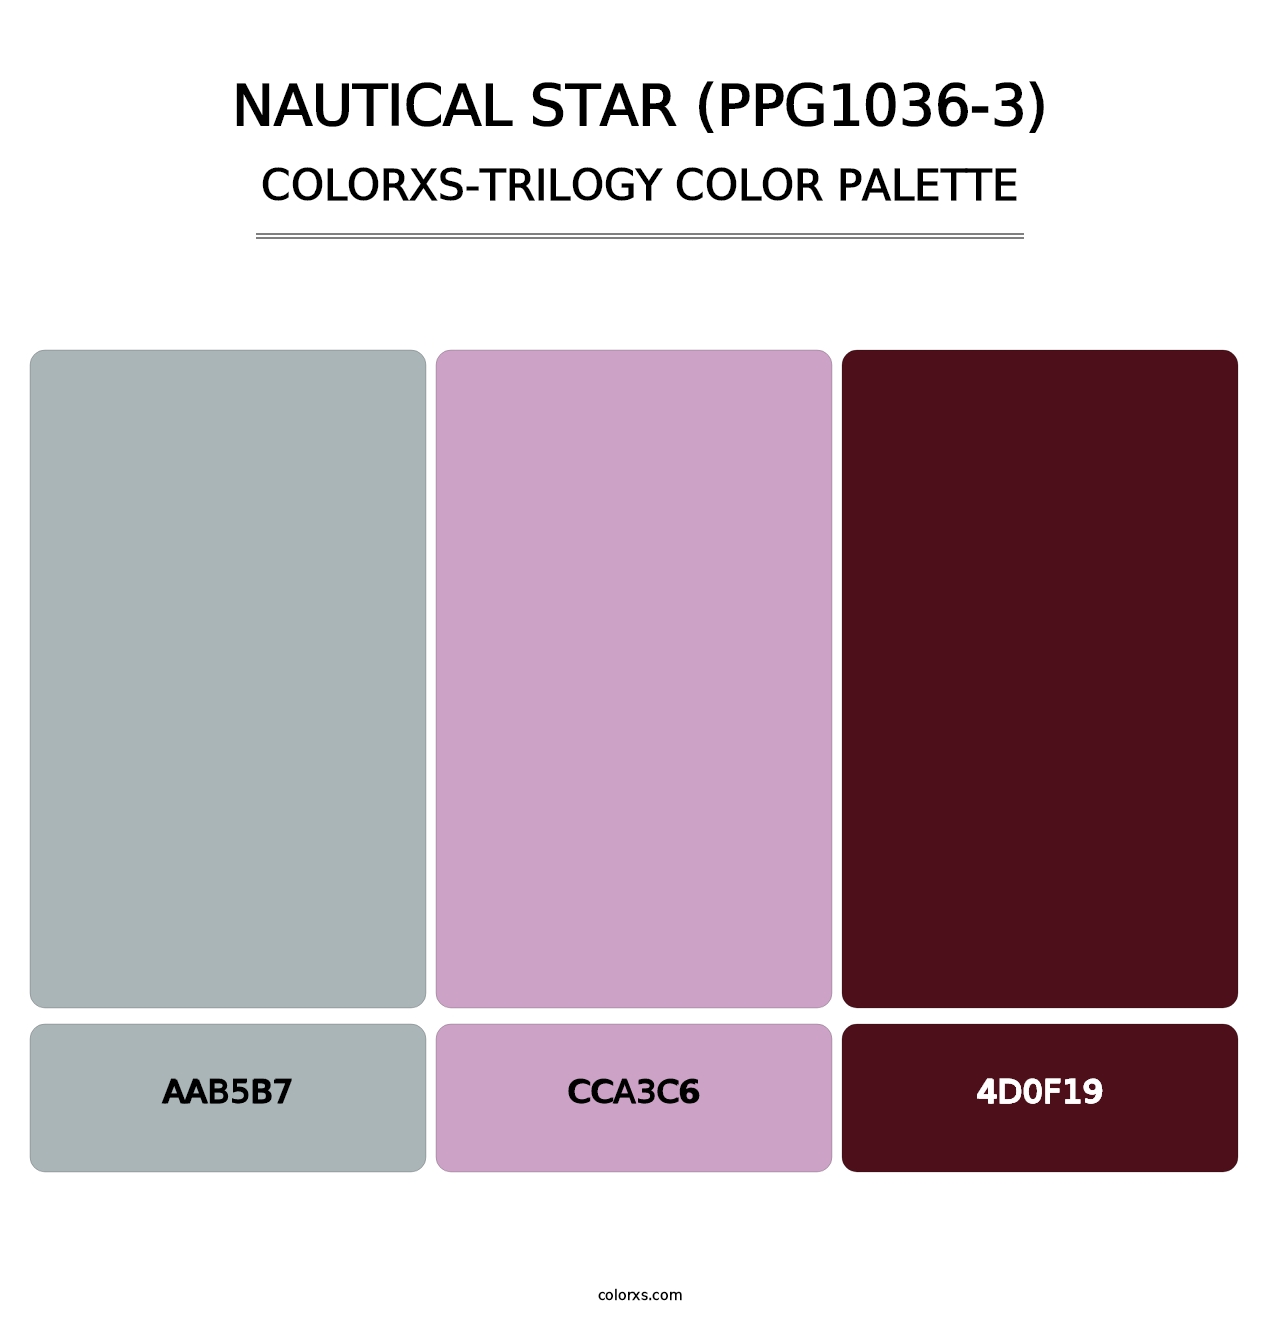 Nautical Star (PPG1036-3) - Colorxs Trilogy Palette